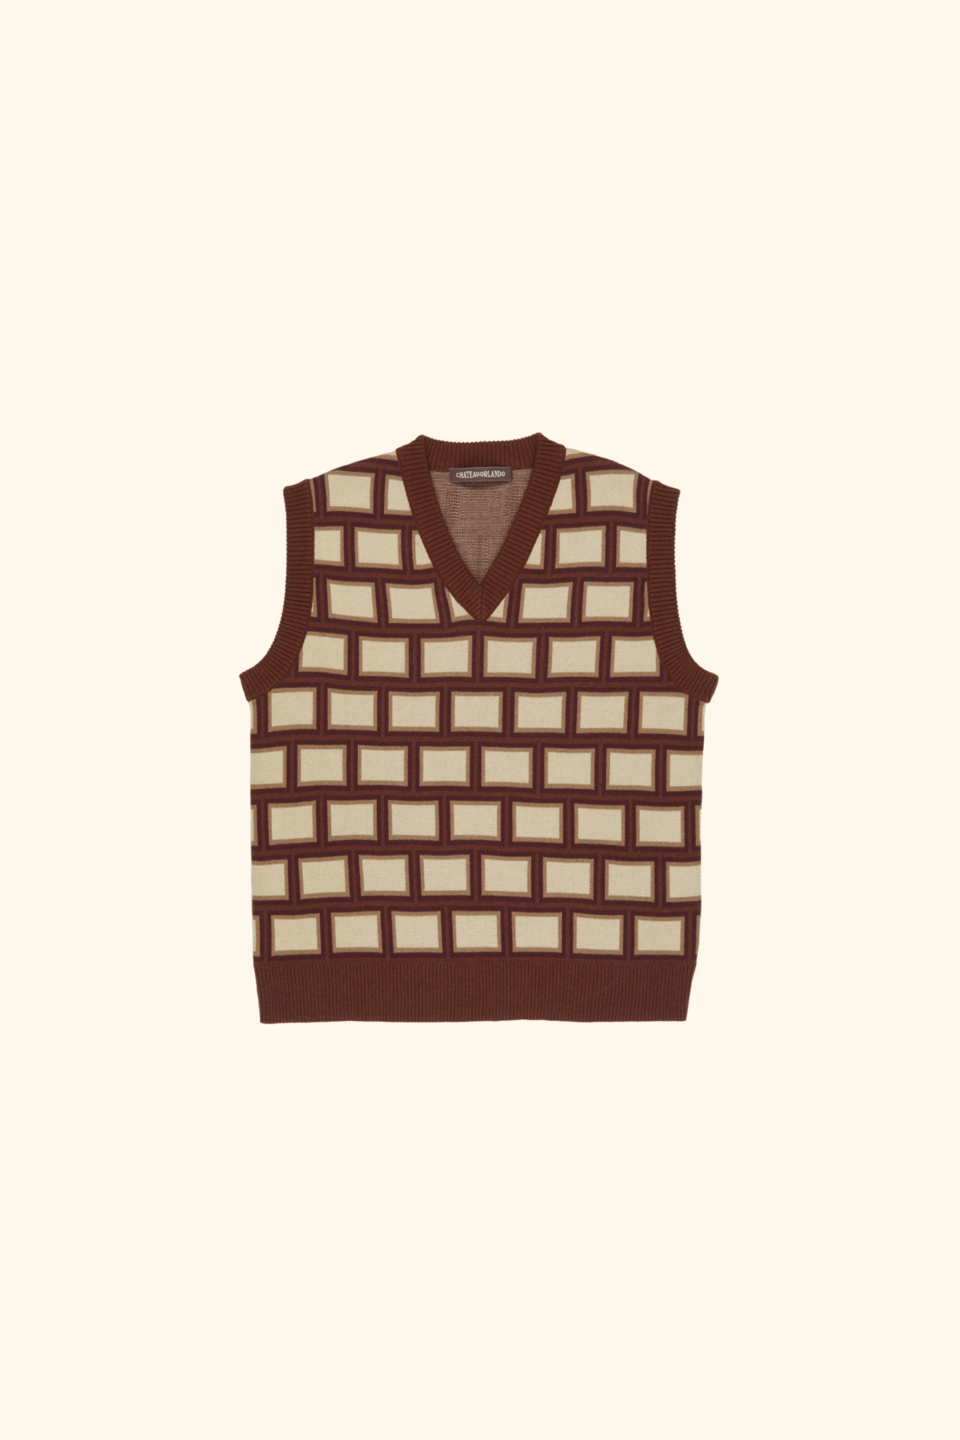 Bricks Vest